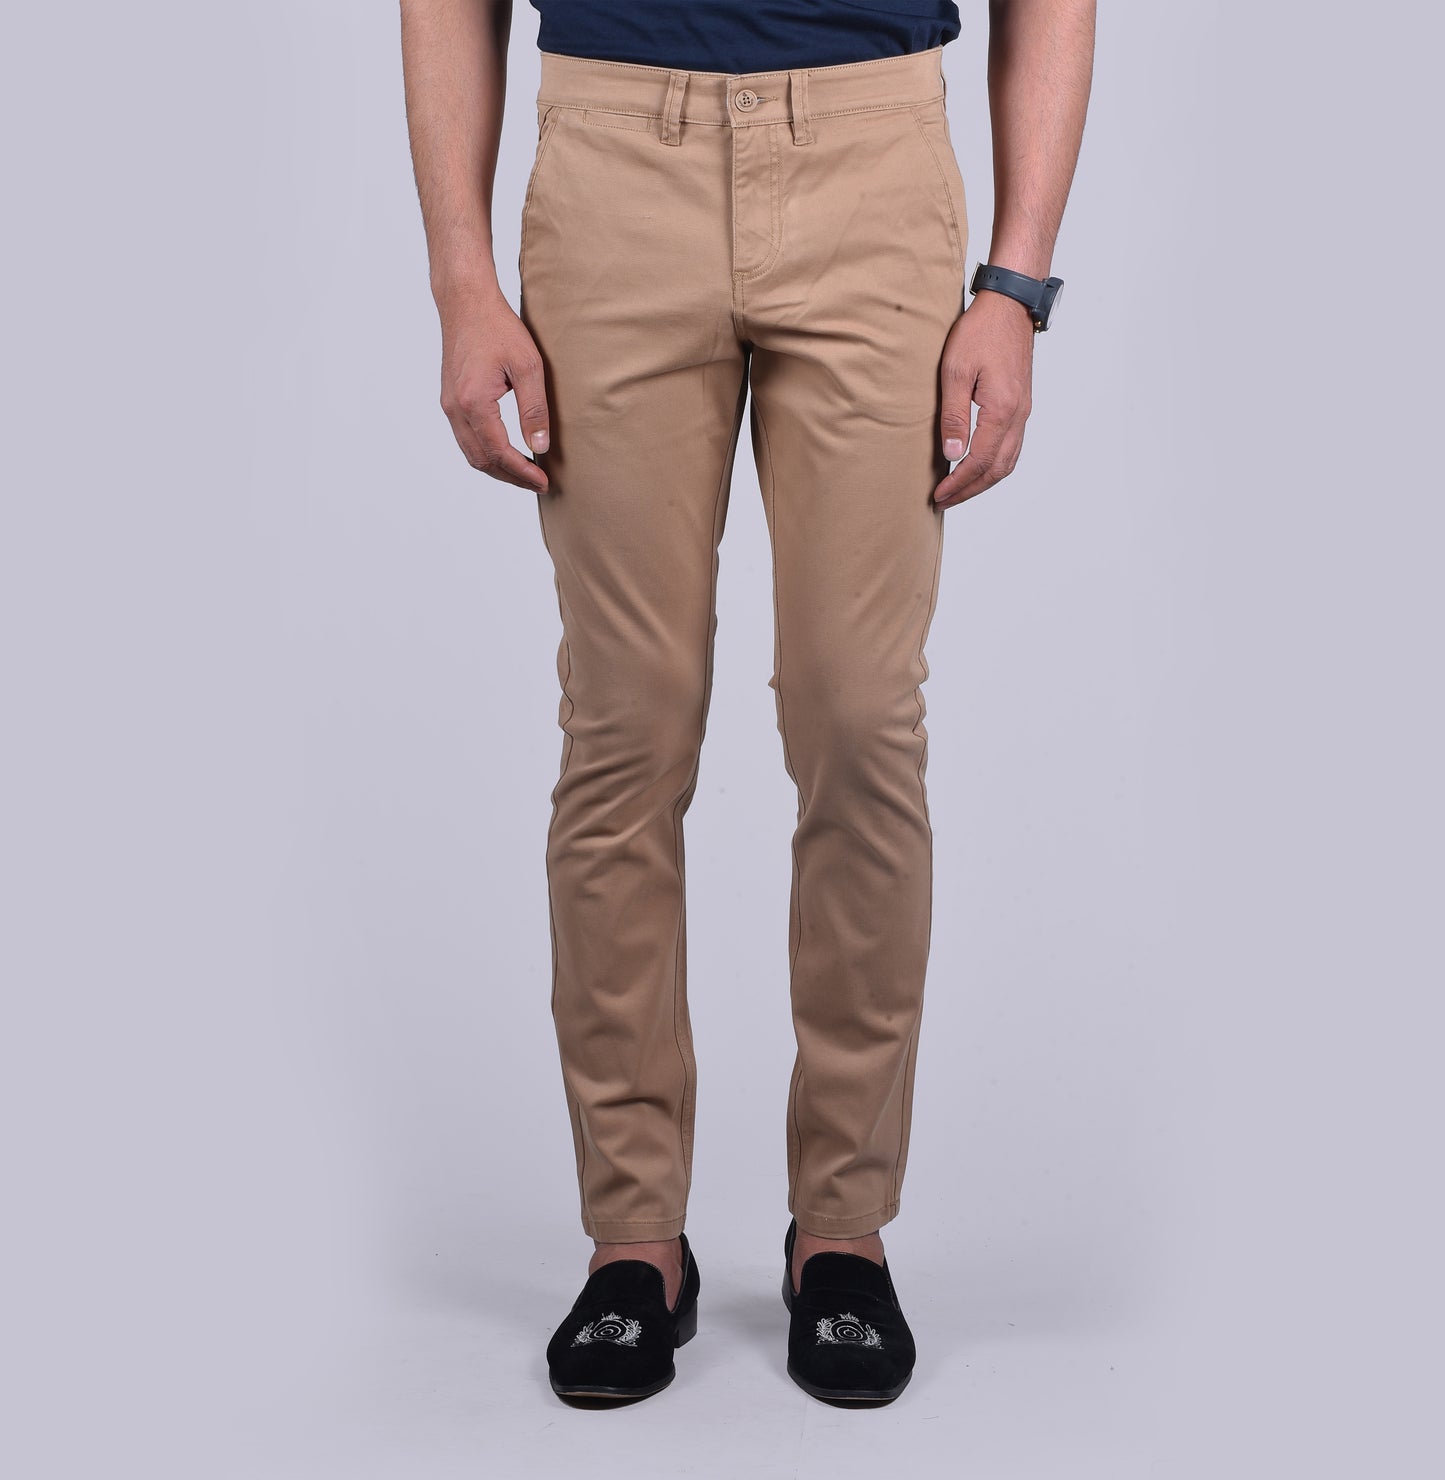 Khaki contour fit trousers. - urban clothing co.